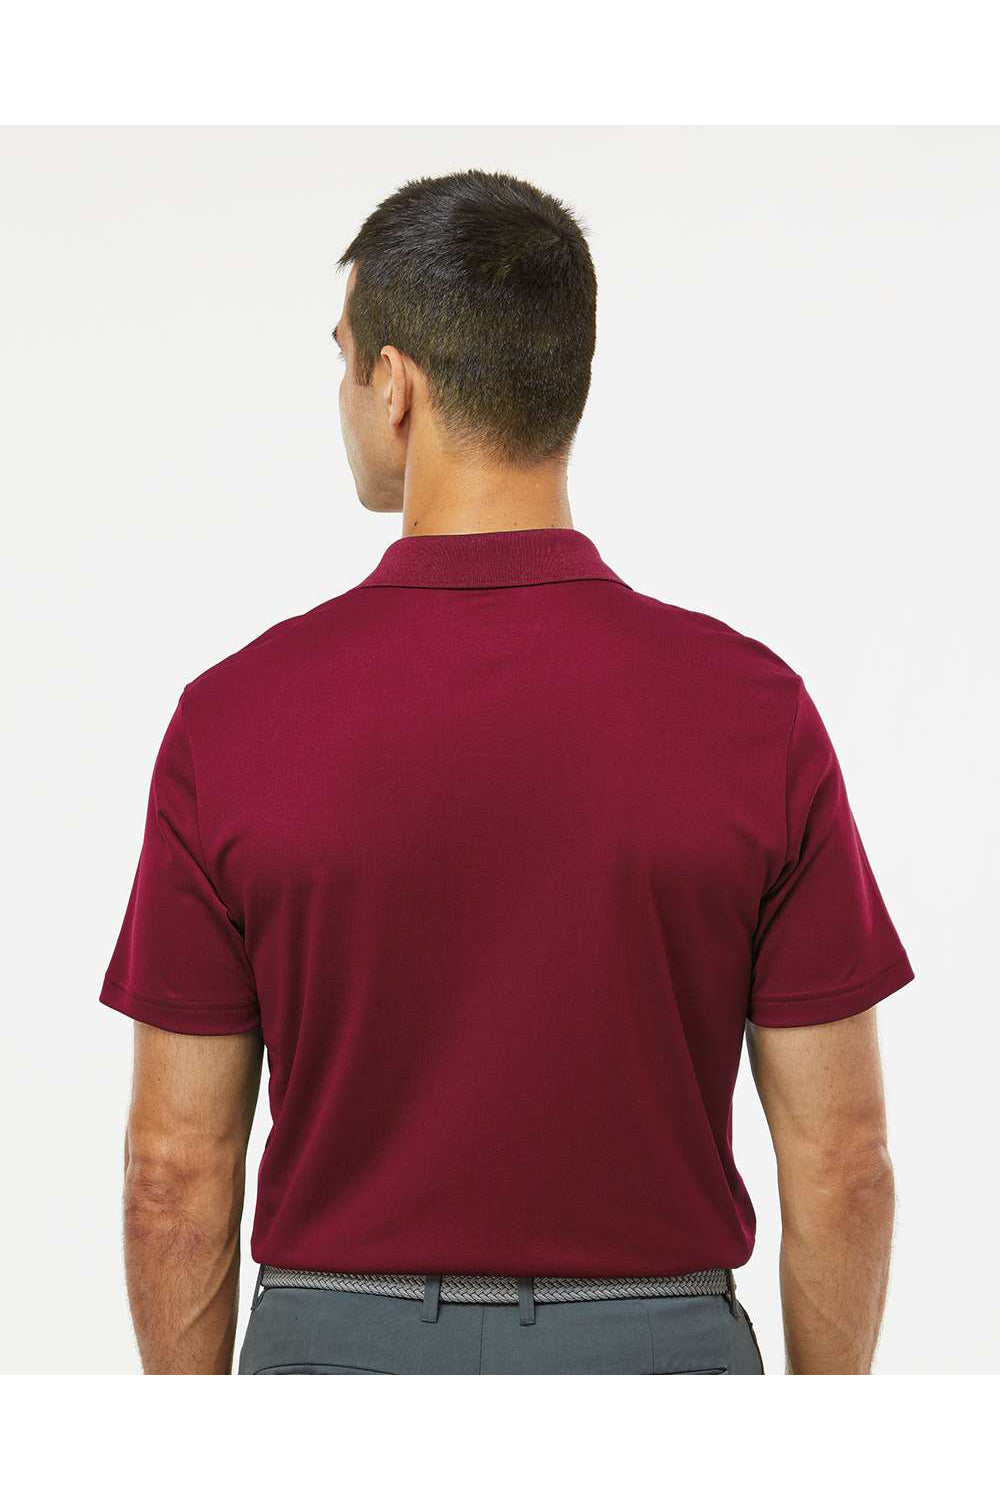 Adidas A430 Mens Basic Short Sleeve Polo Shirt Collegiate Burgundy Model Back